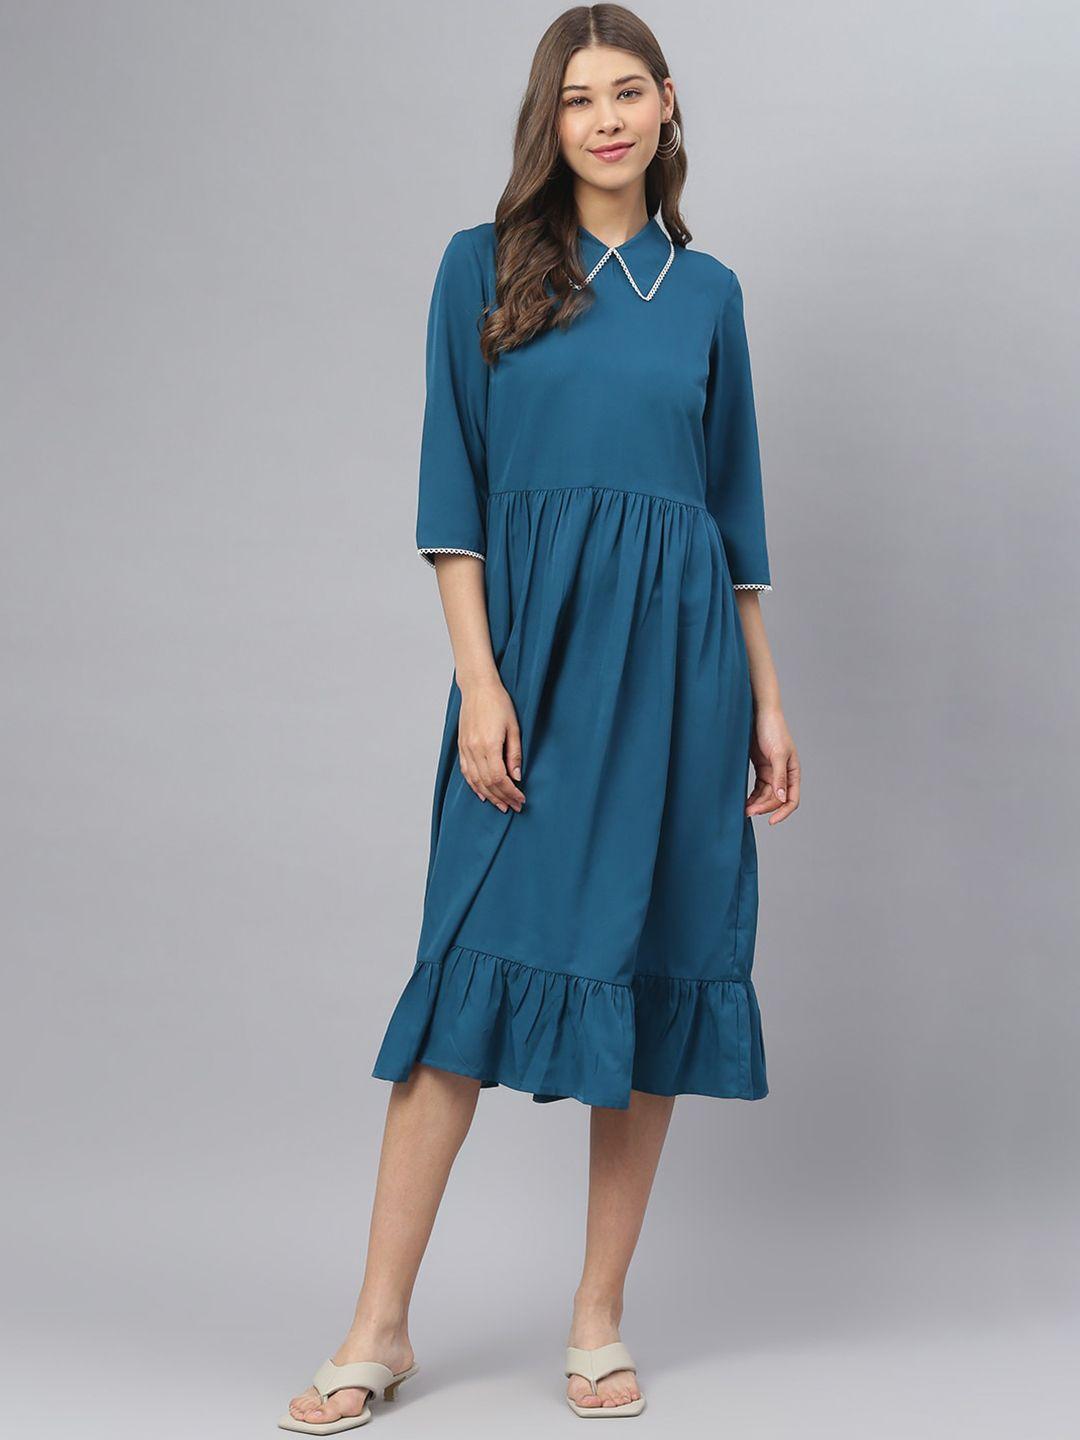 deebaco-turquoise-blue-solid-midi-dress